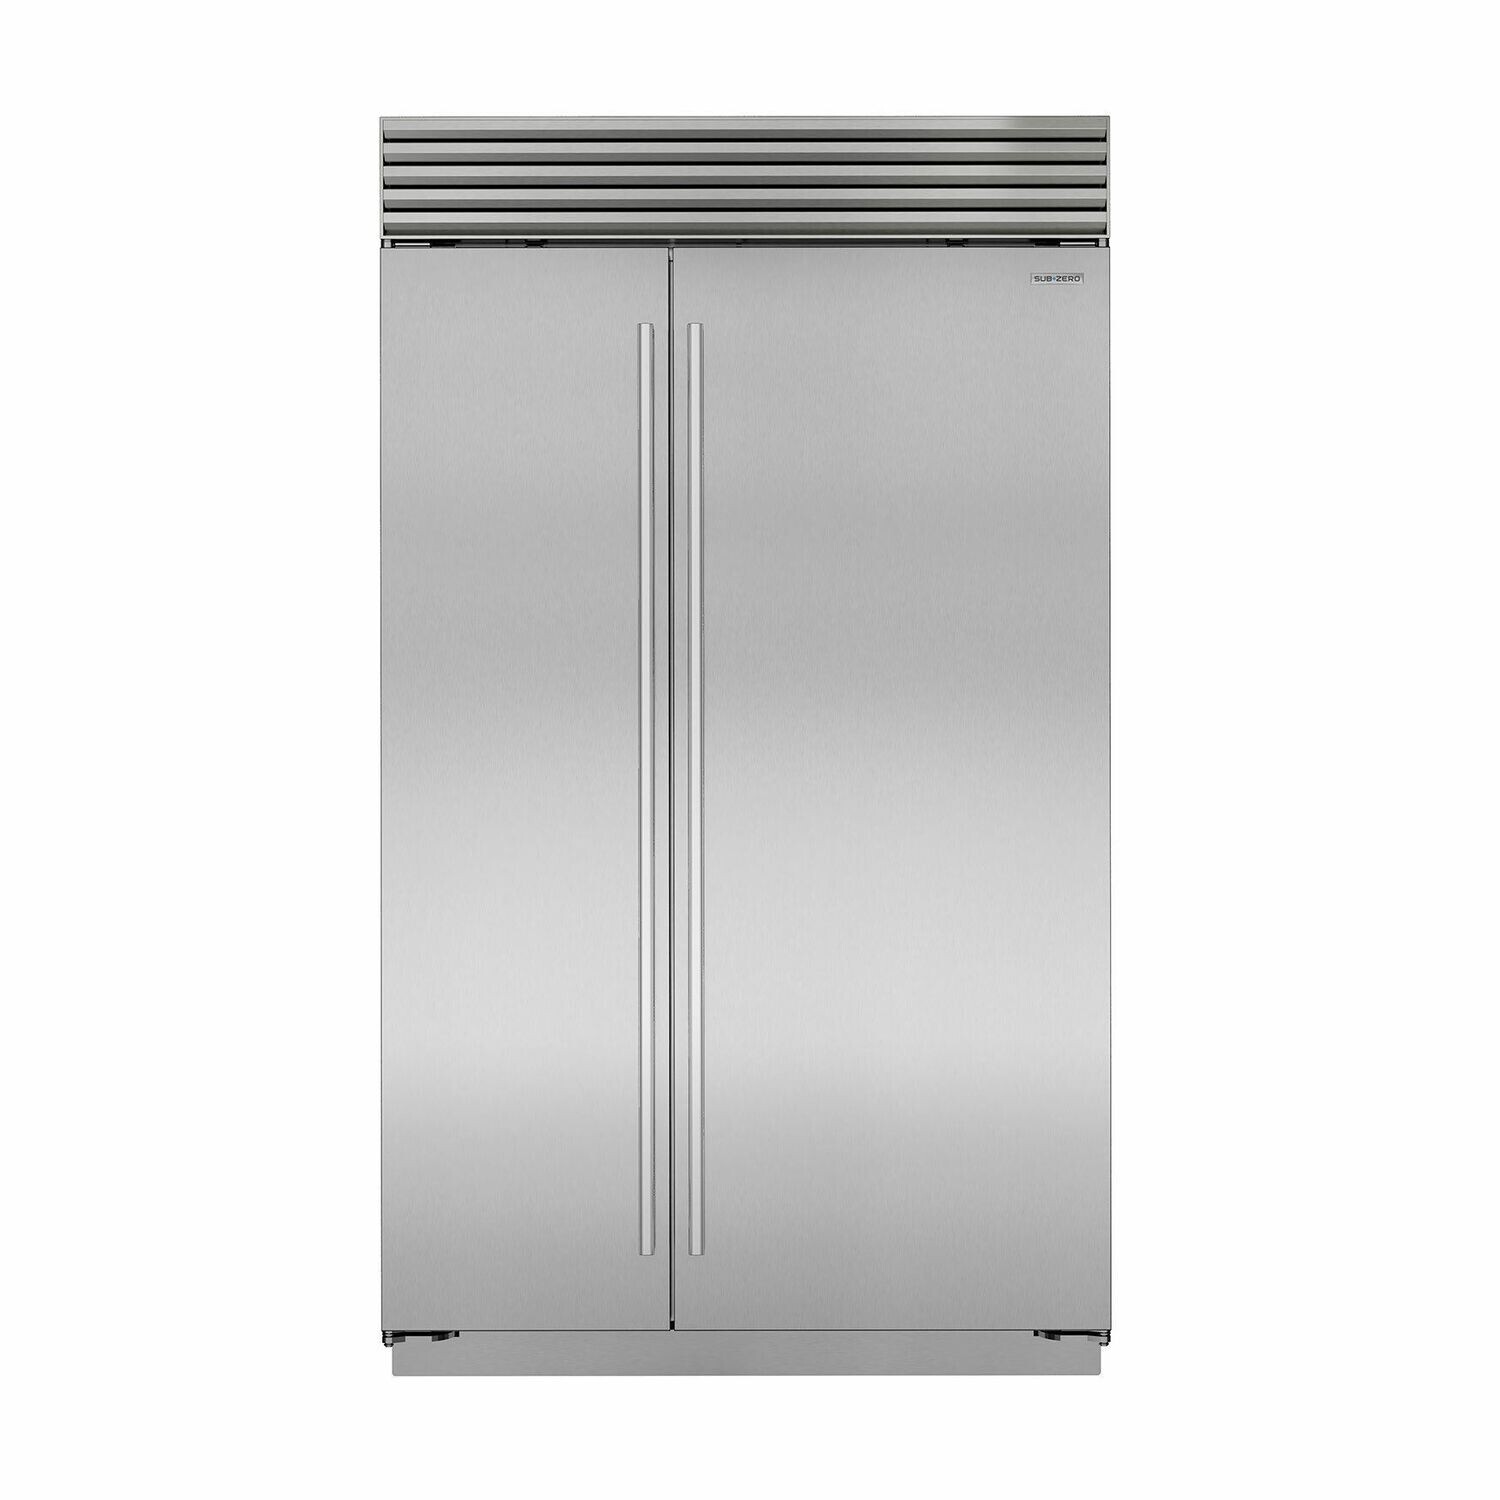 Sub-Zero 1219mm Refrigeration Fridge Freezer Side-by-Side